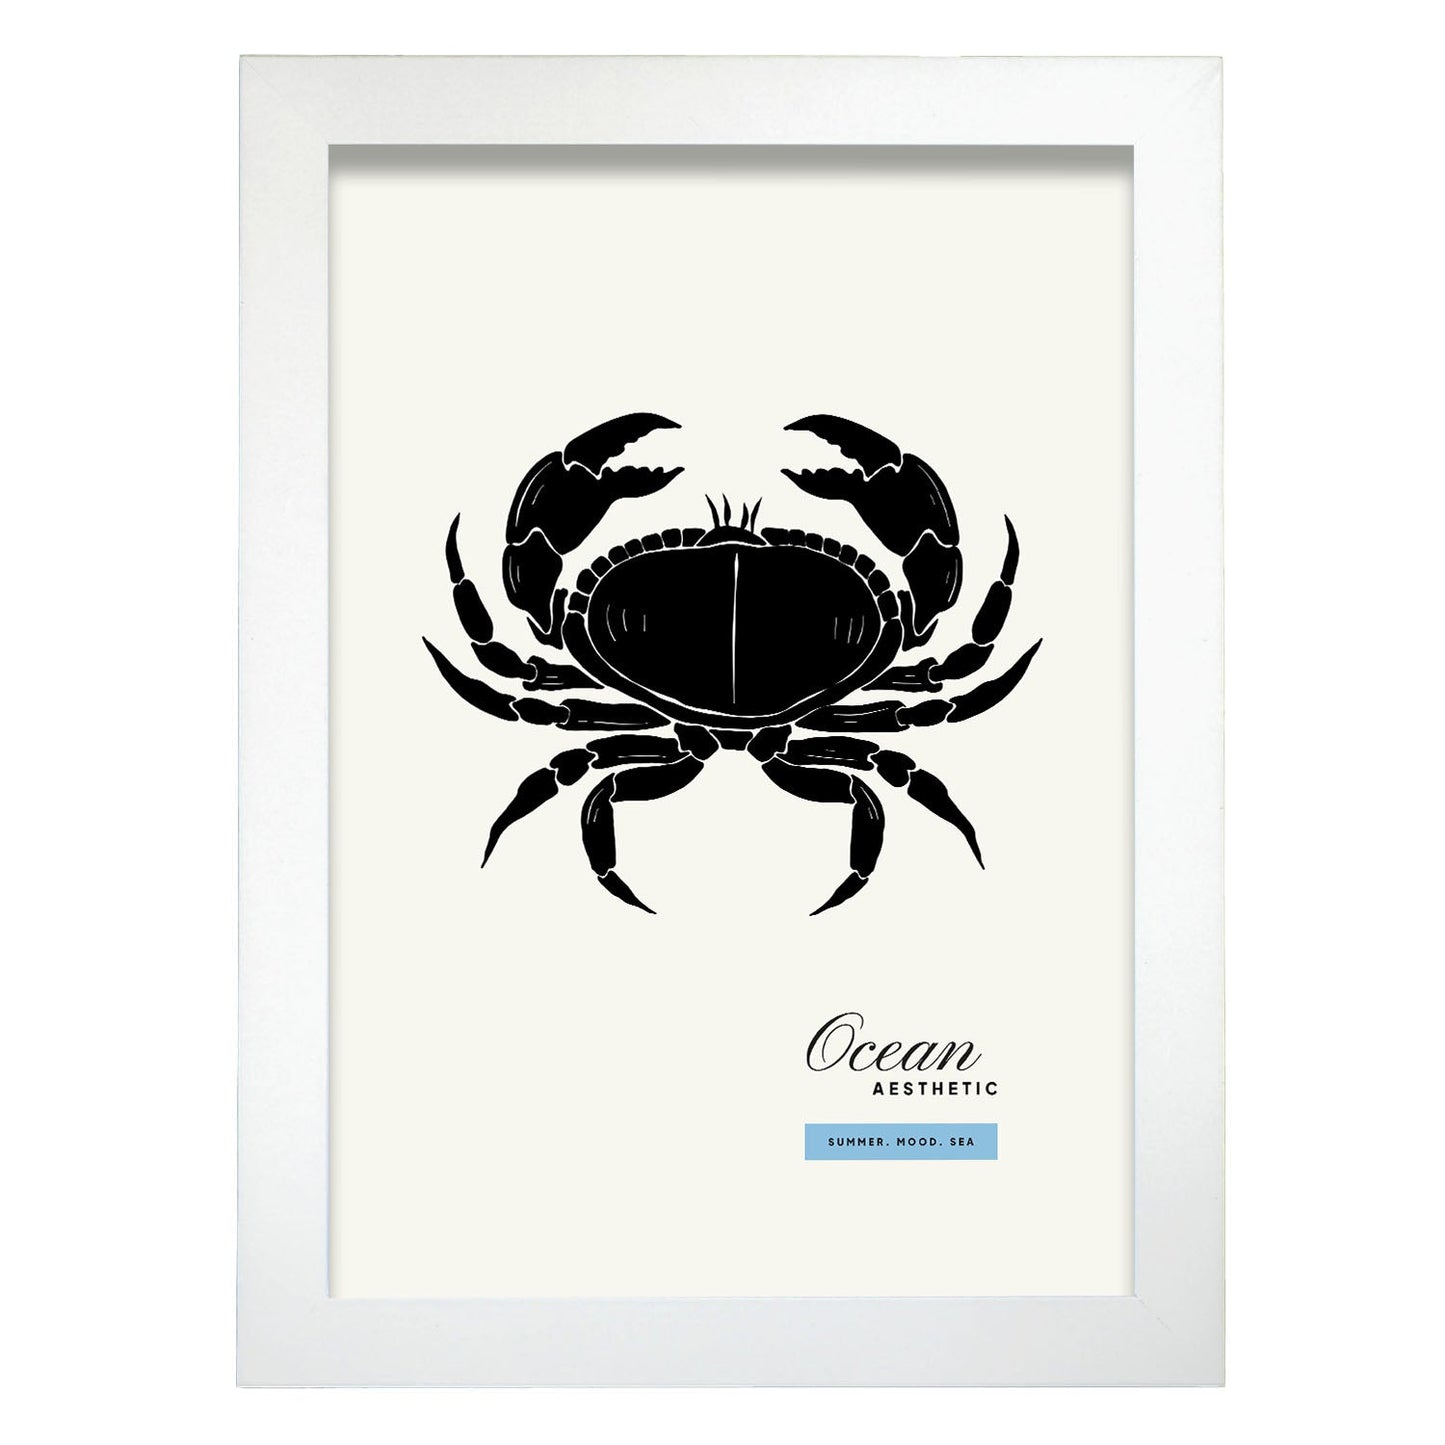 Dungeness crab-Artwork-Nacnic-A4-Marco Blanco-Nacnic Estudio SL